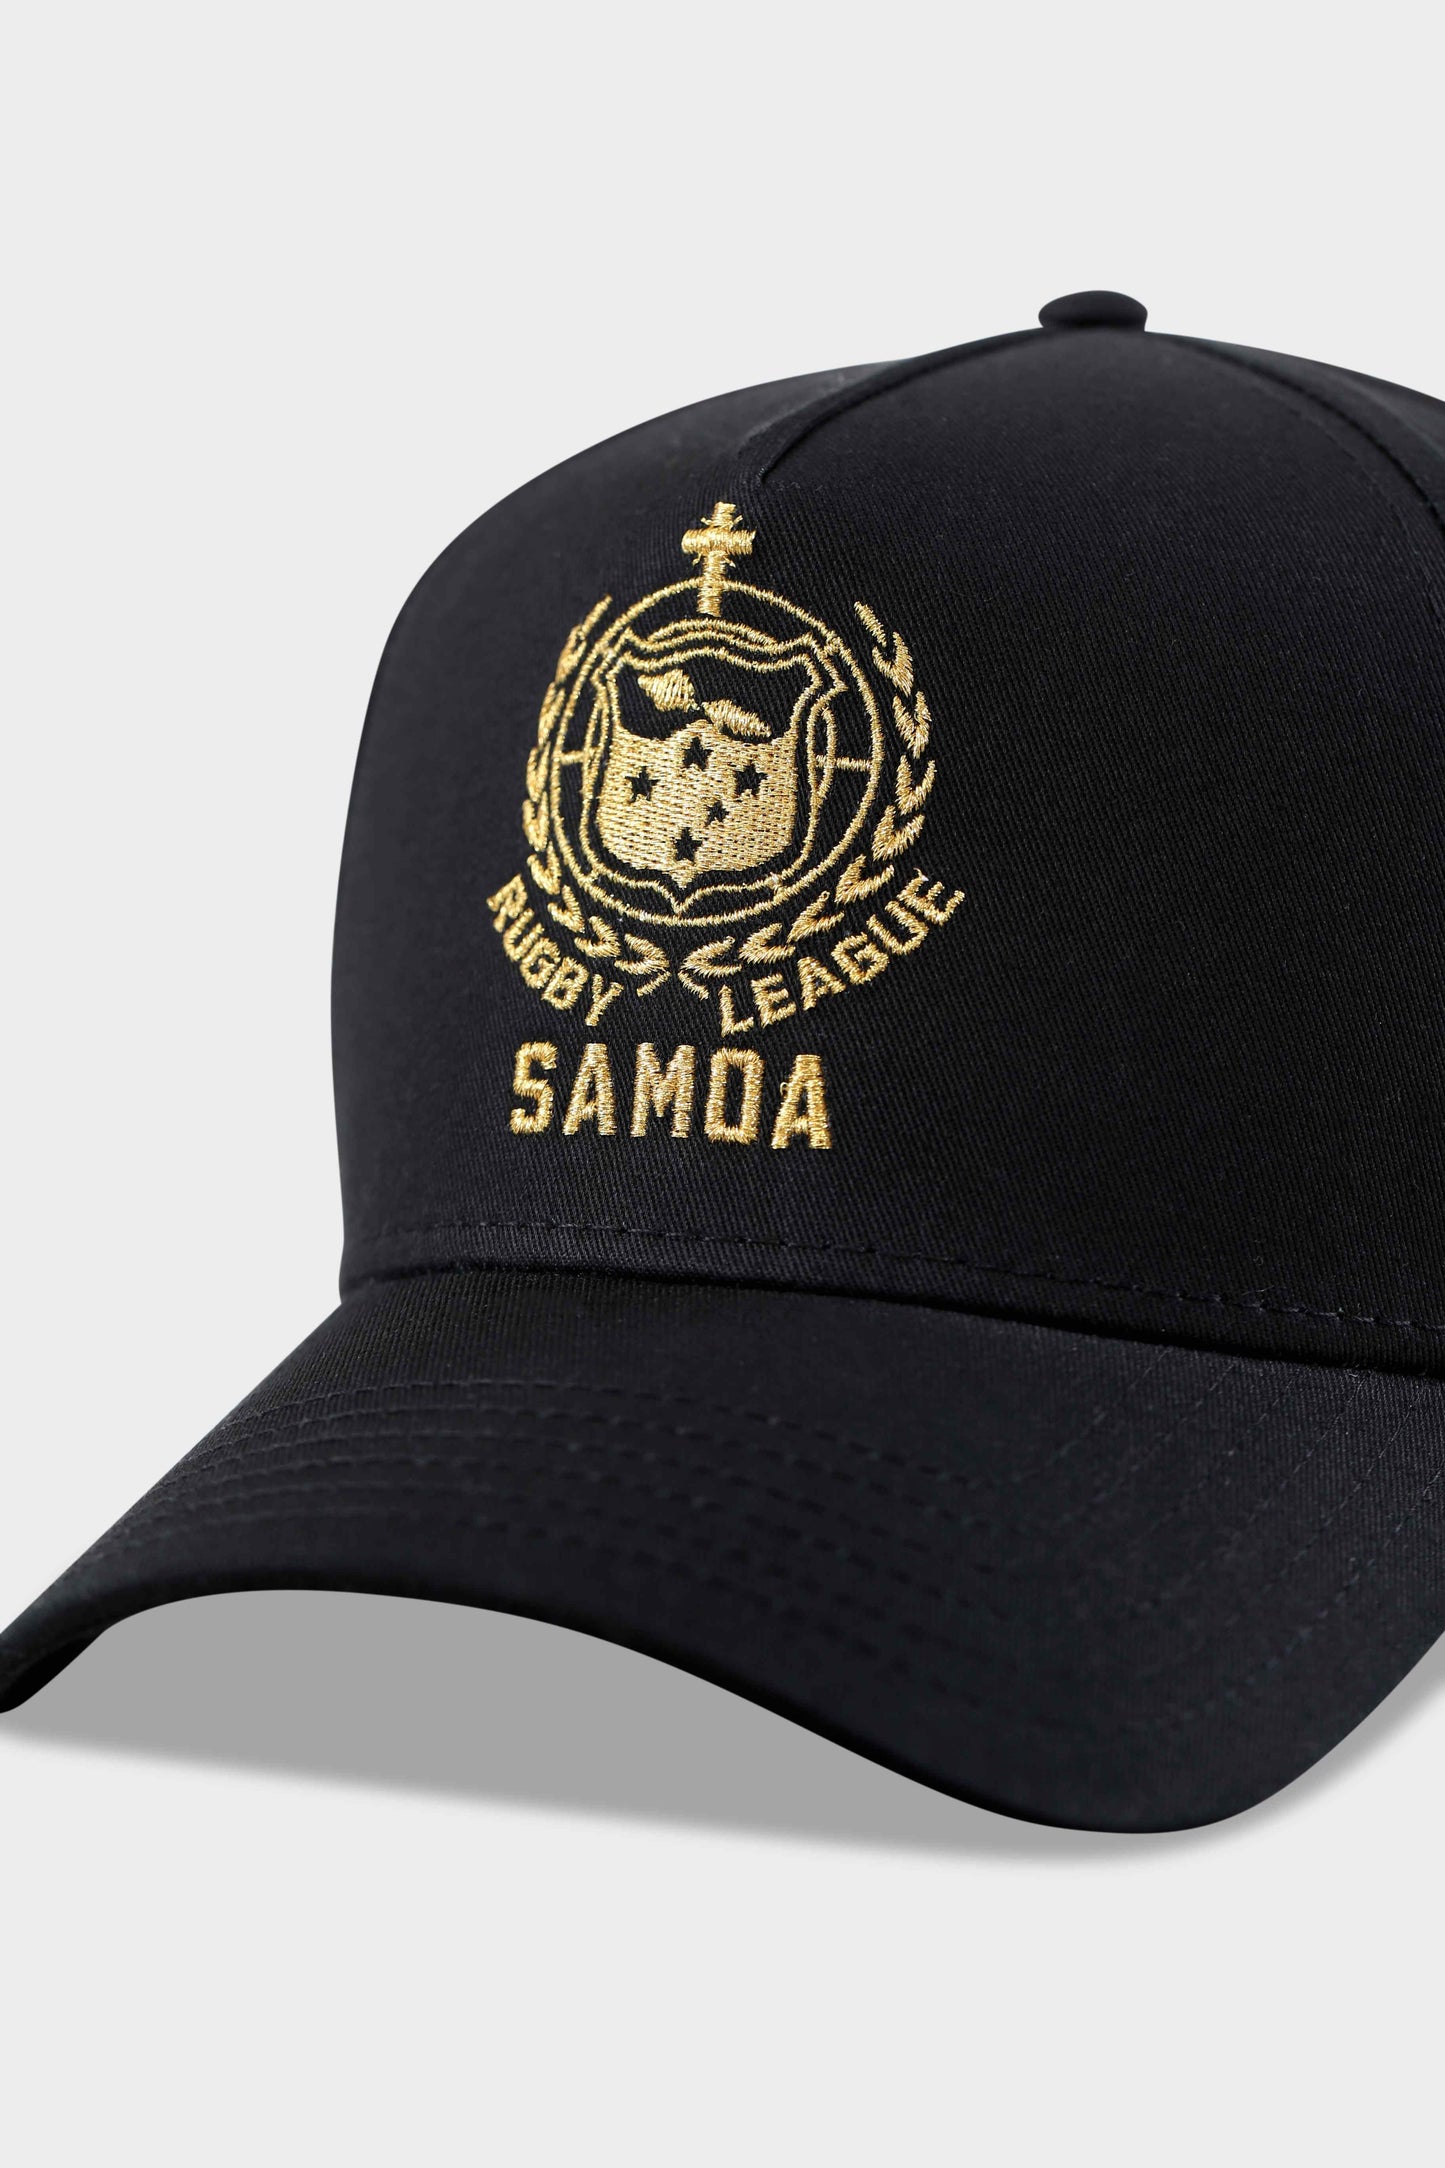 Toa Samoa Official A Frame Snapback Black/Gold